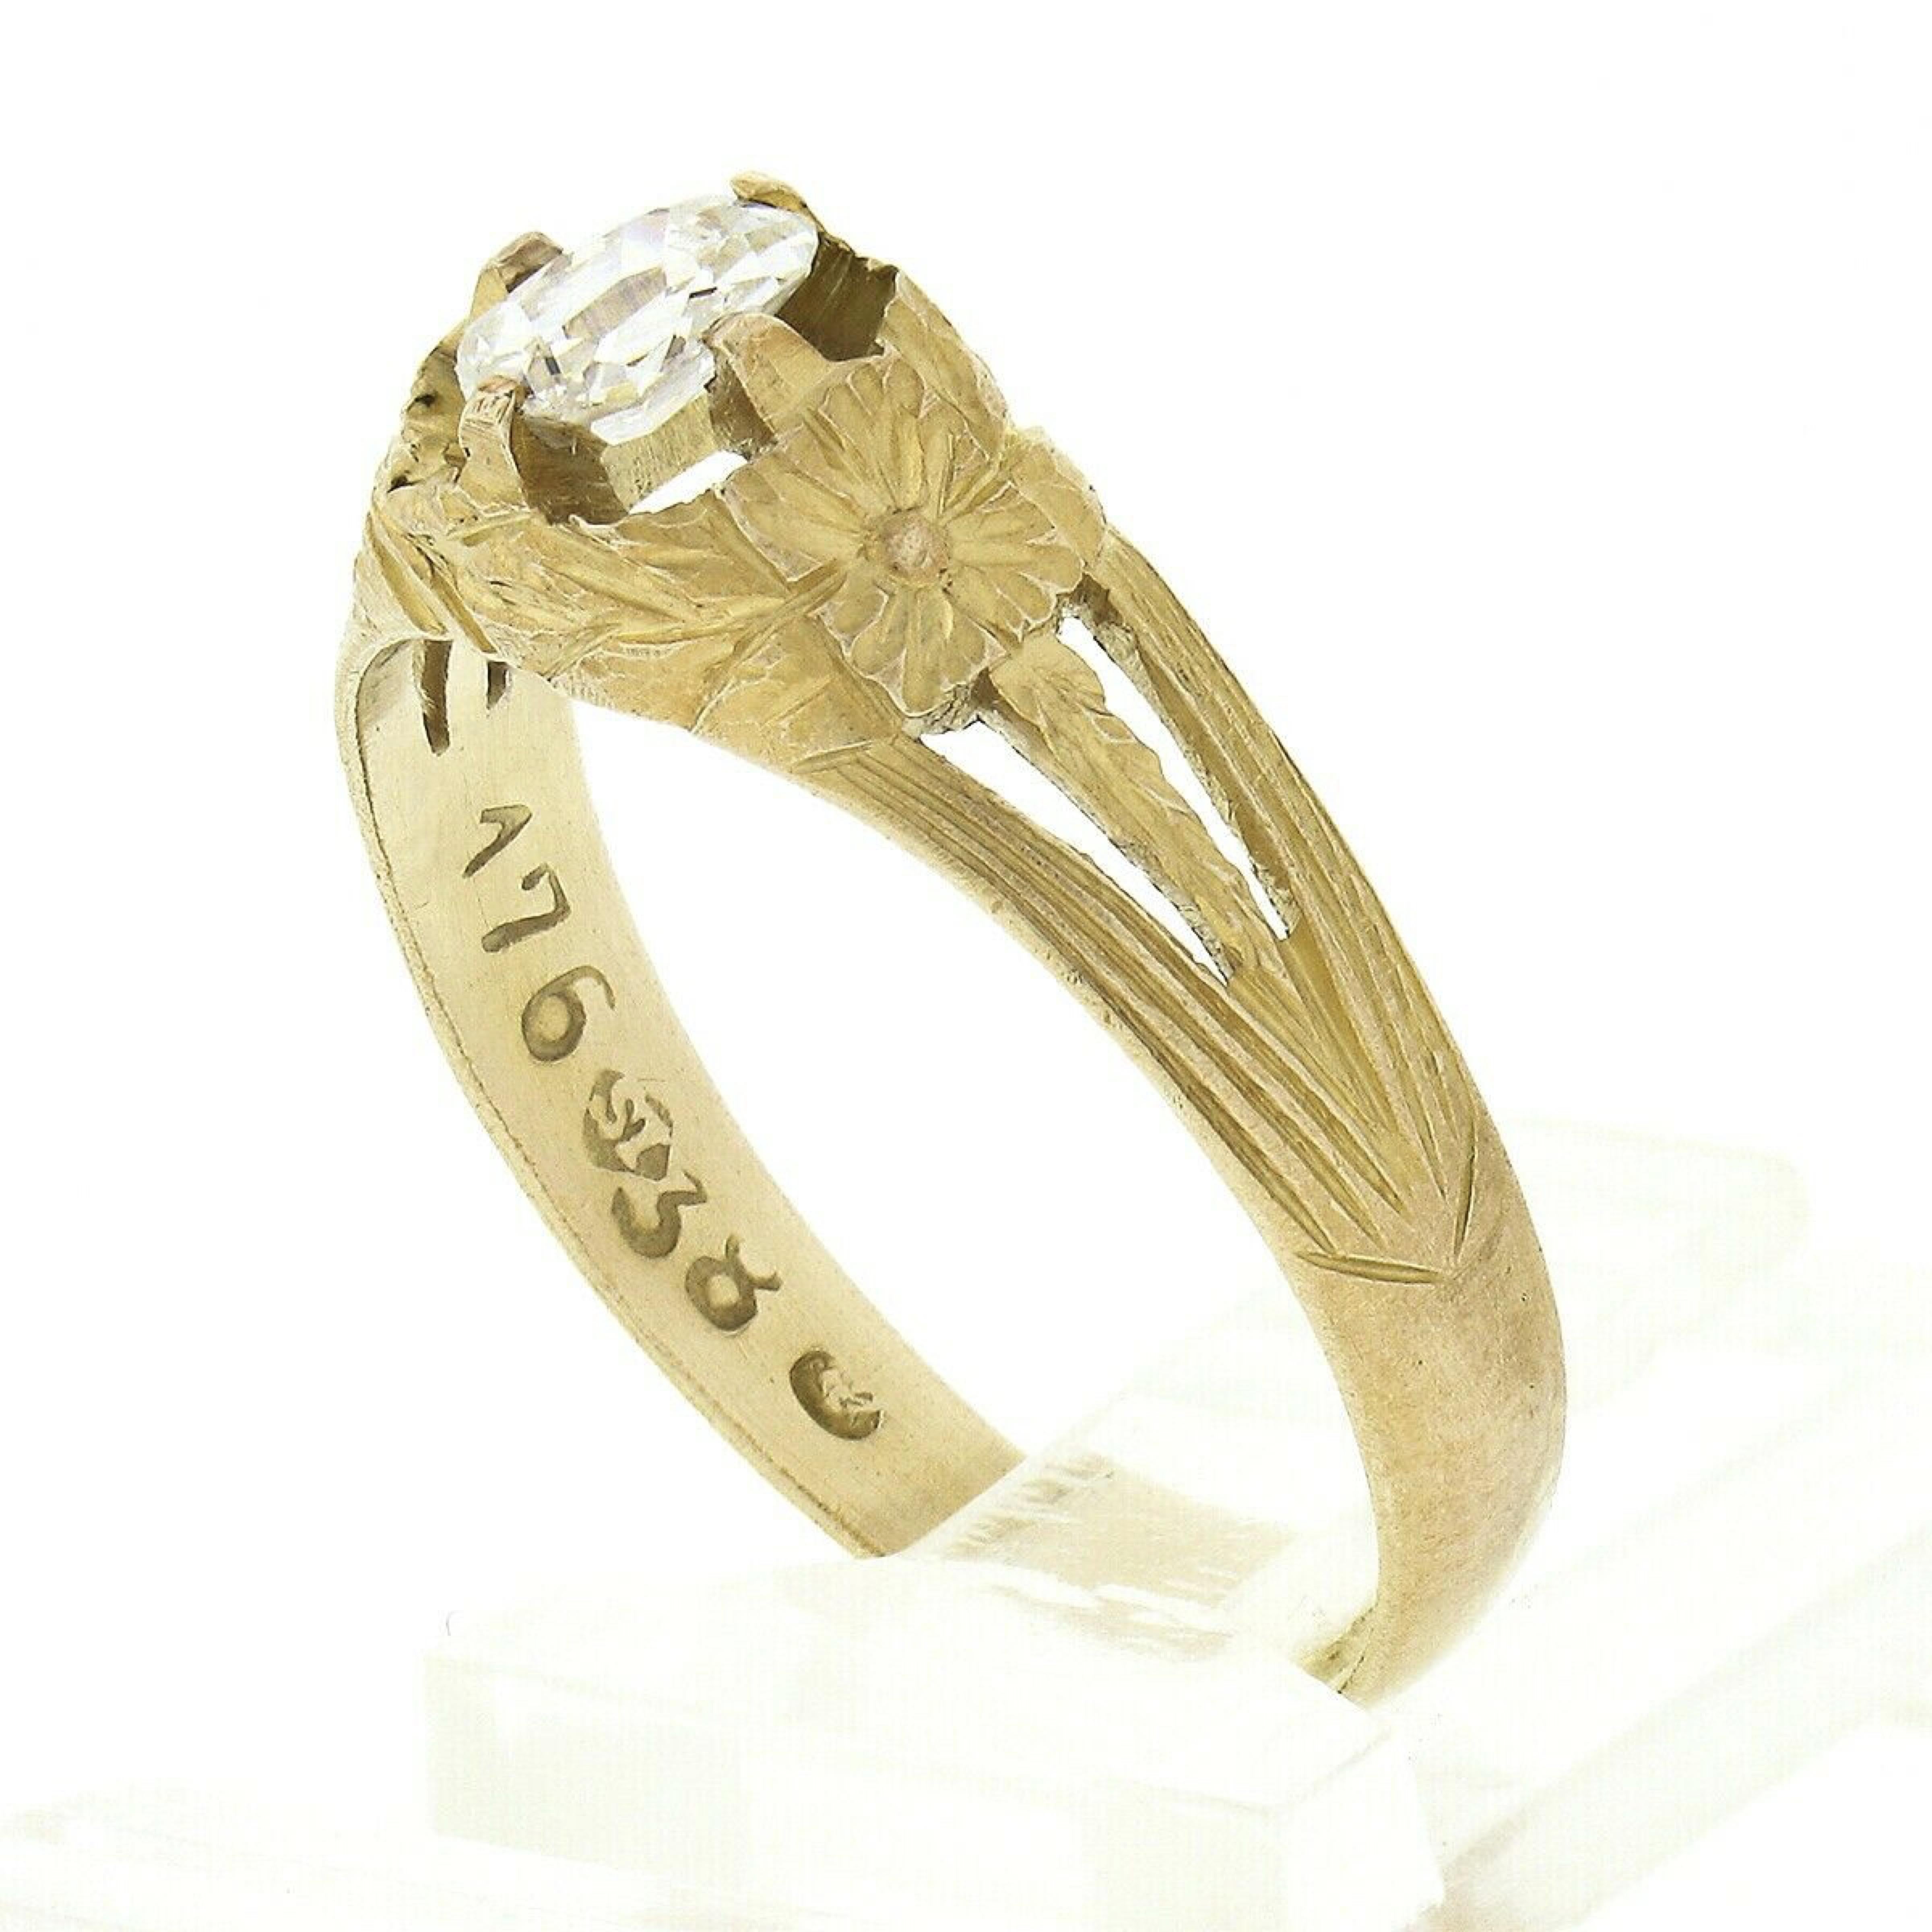 Antique Art Nouveau 14k Gold Old Mine Cut Diamond Hand Engraved Engagement Ring For Sale 2